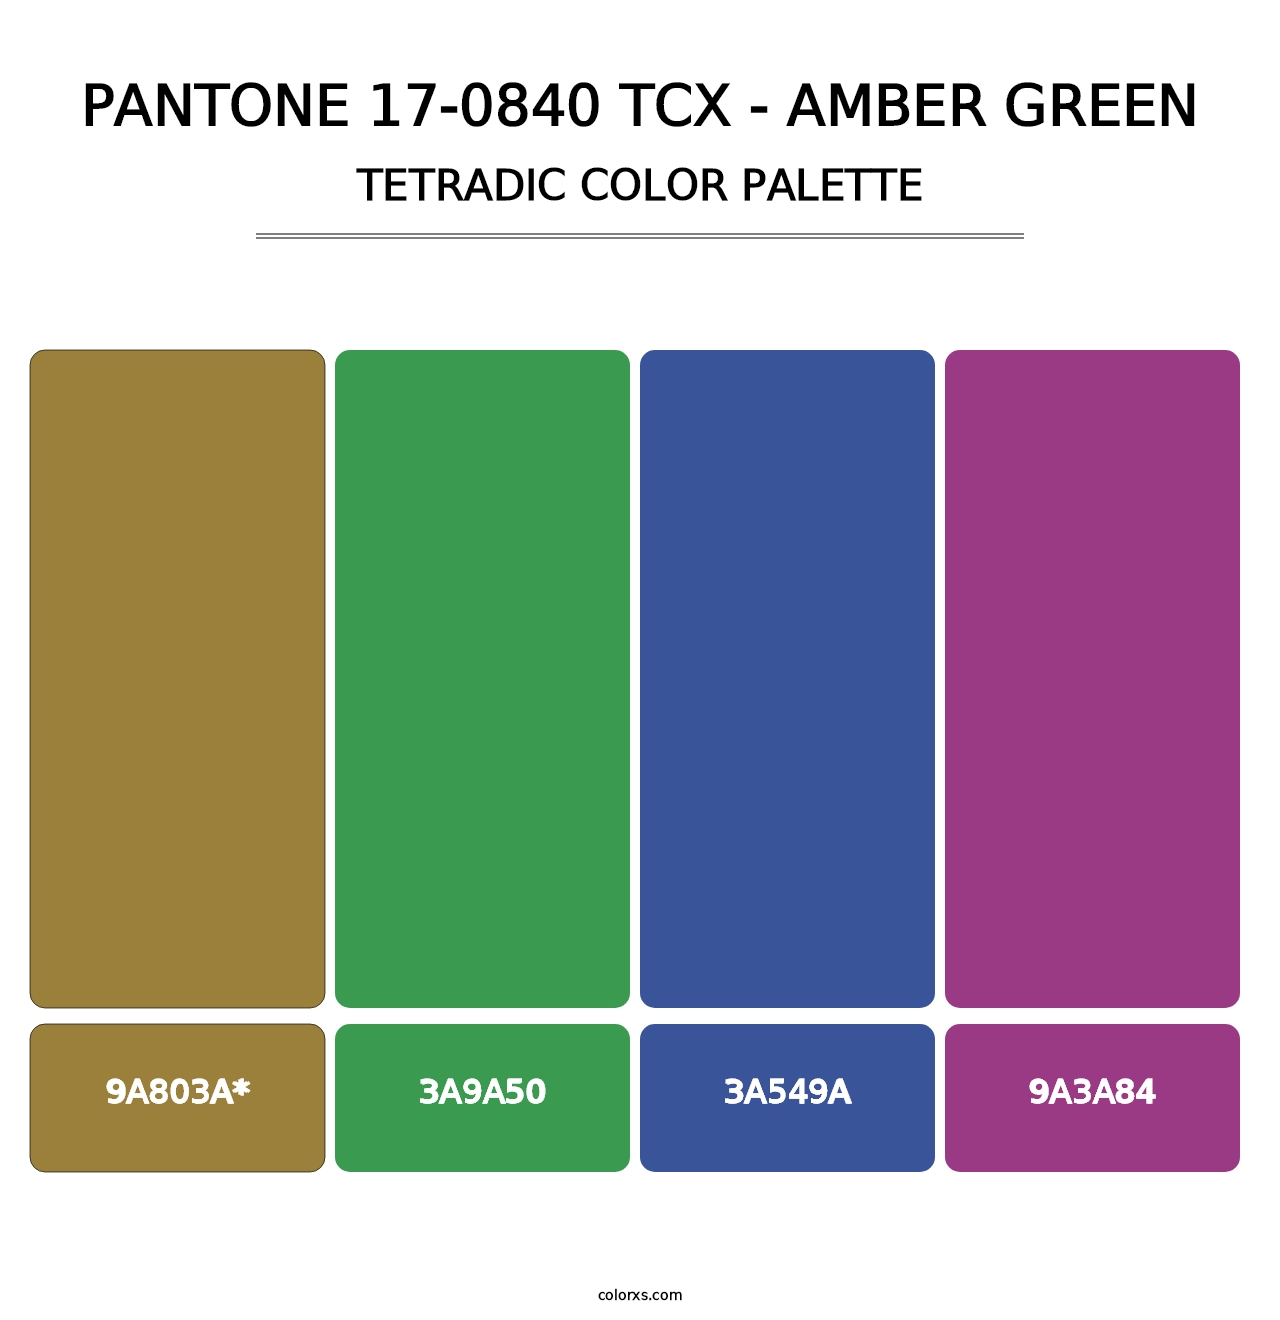 PANTONE 17-0840 TCX - Amber Green - Tetradic Color Palette